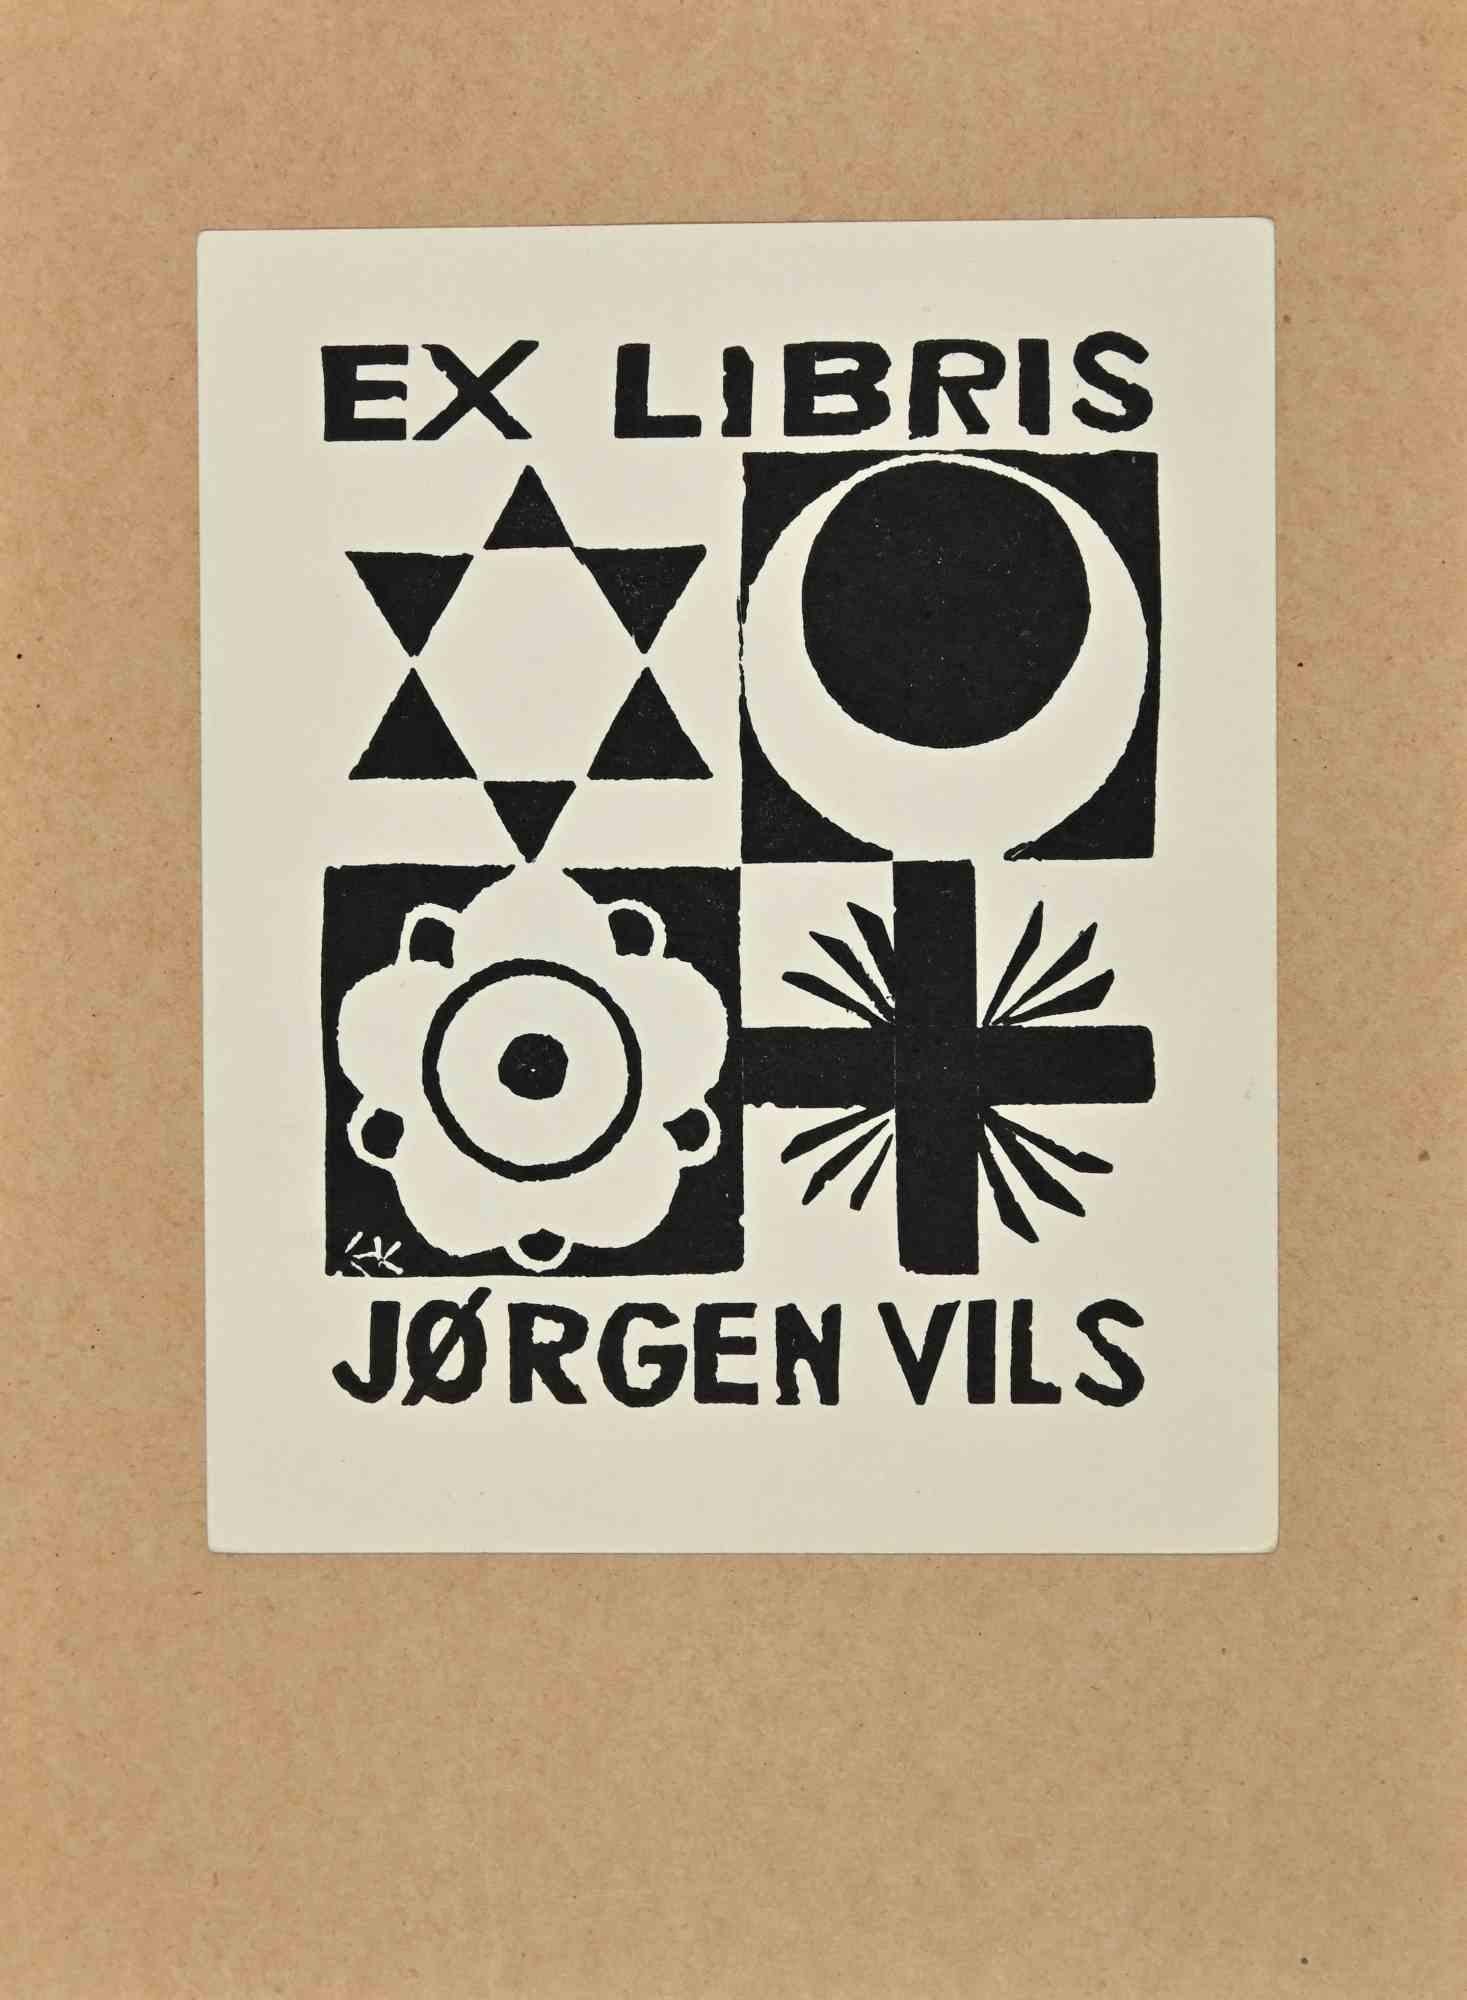  Ex Libris - Jorgen Vils - Woodcut by Jorgen Vils Pedersen - 1950s